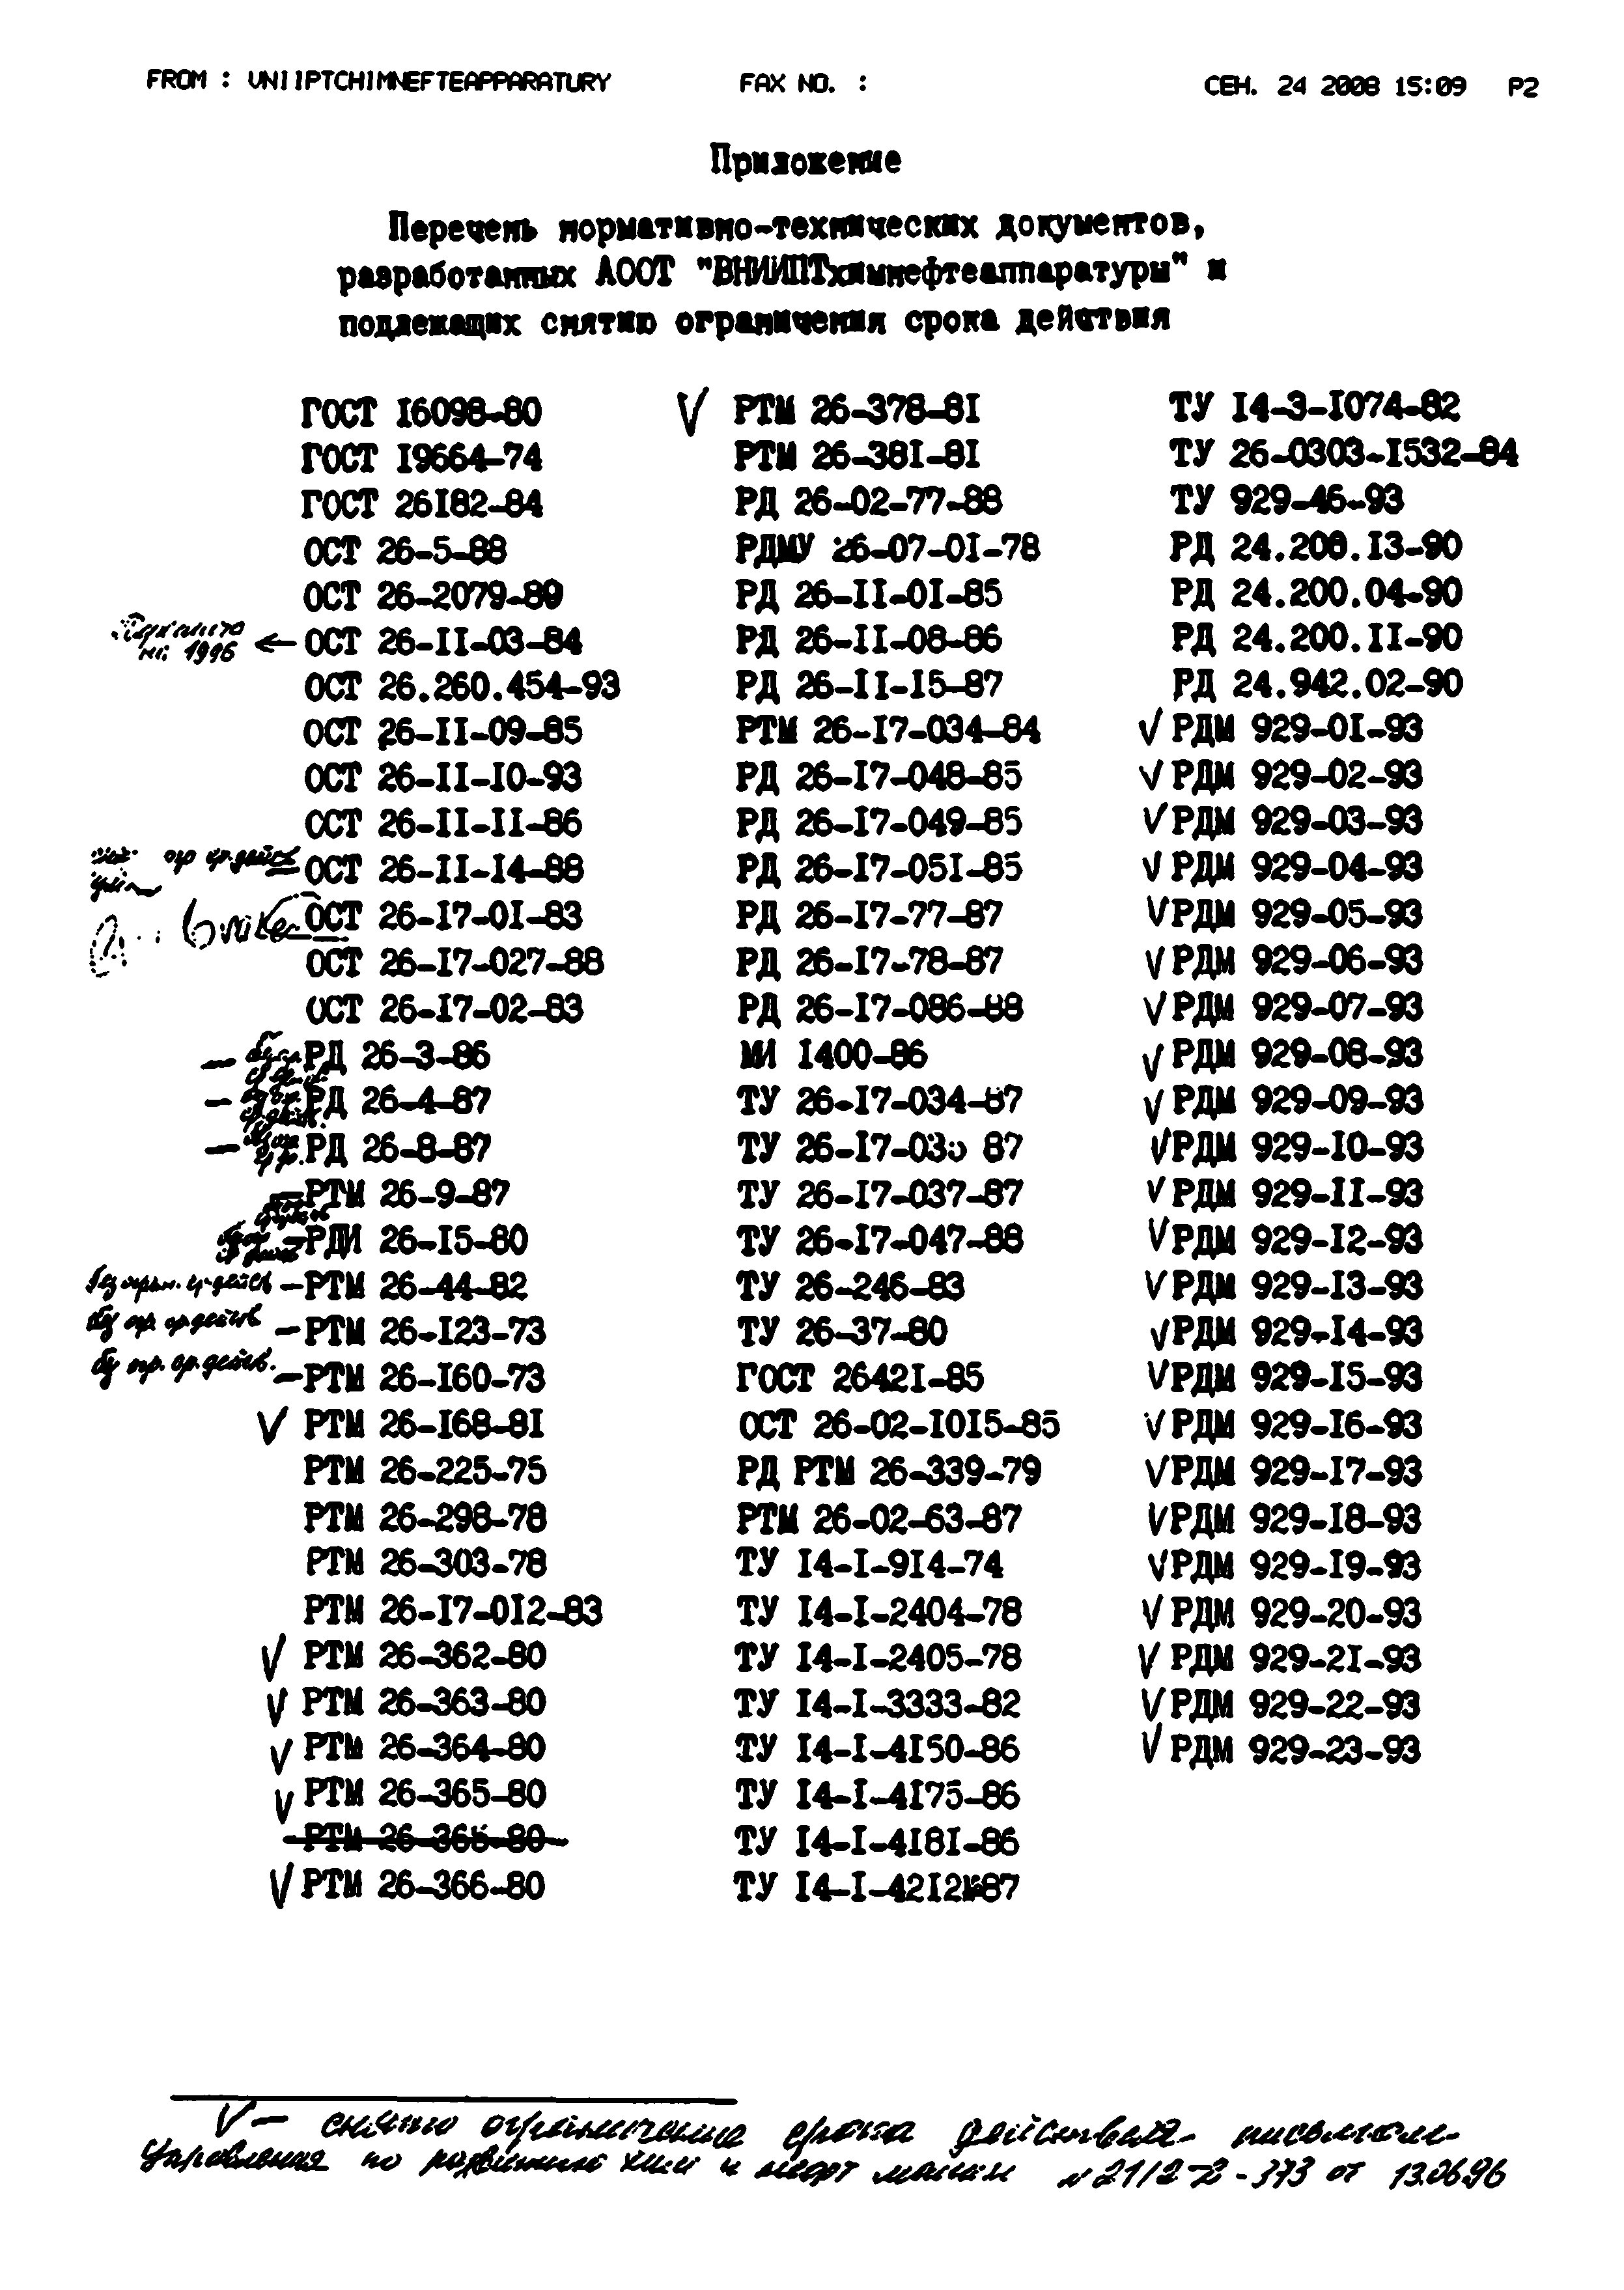 РДМ 929-22-93